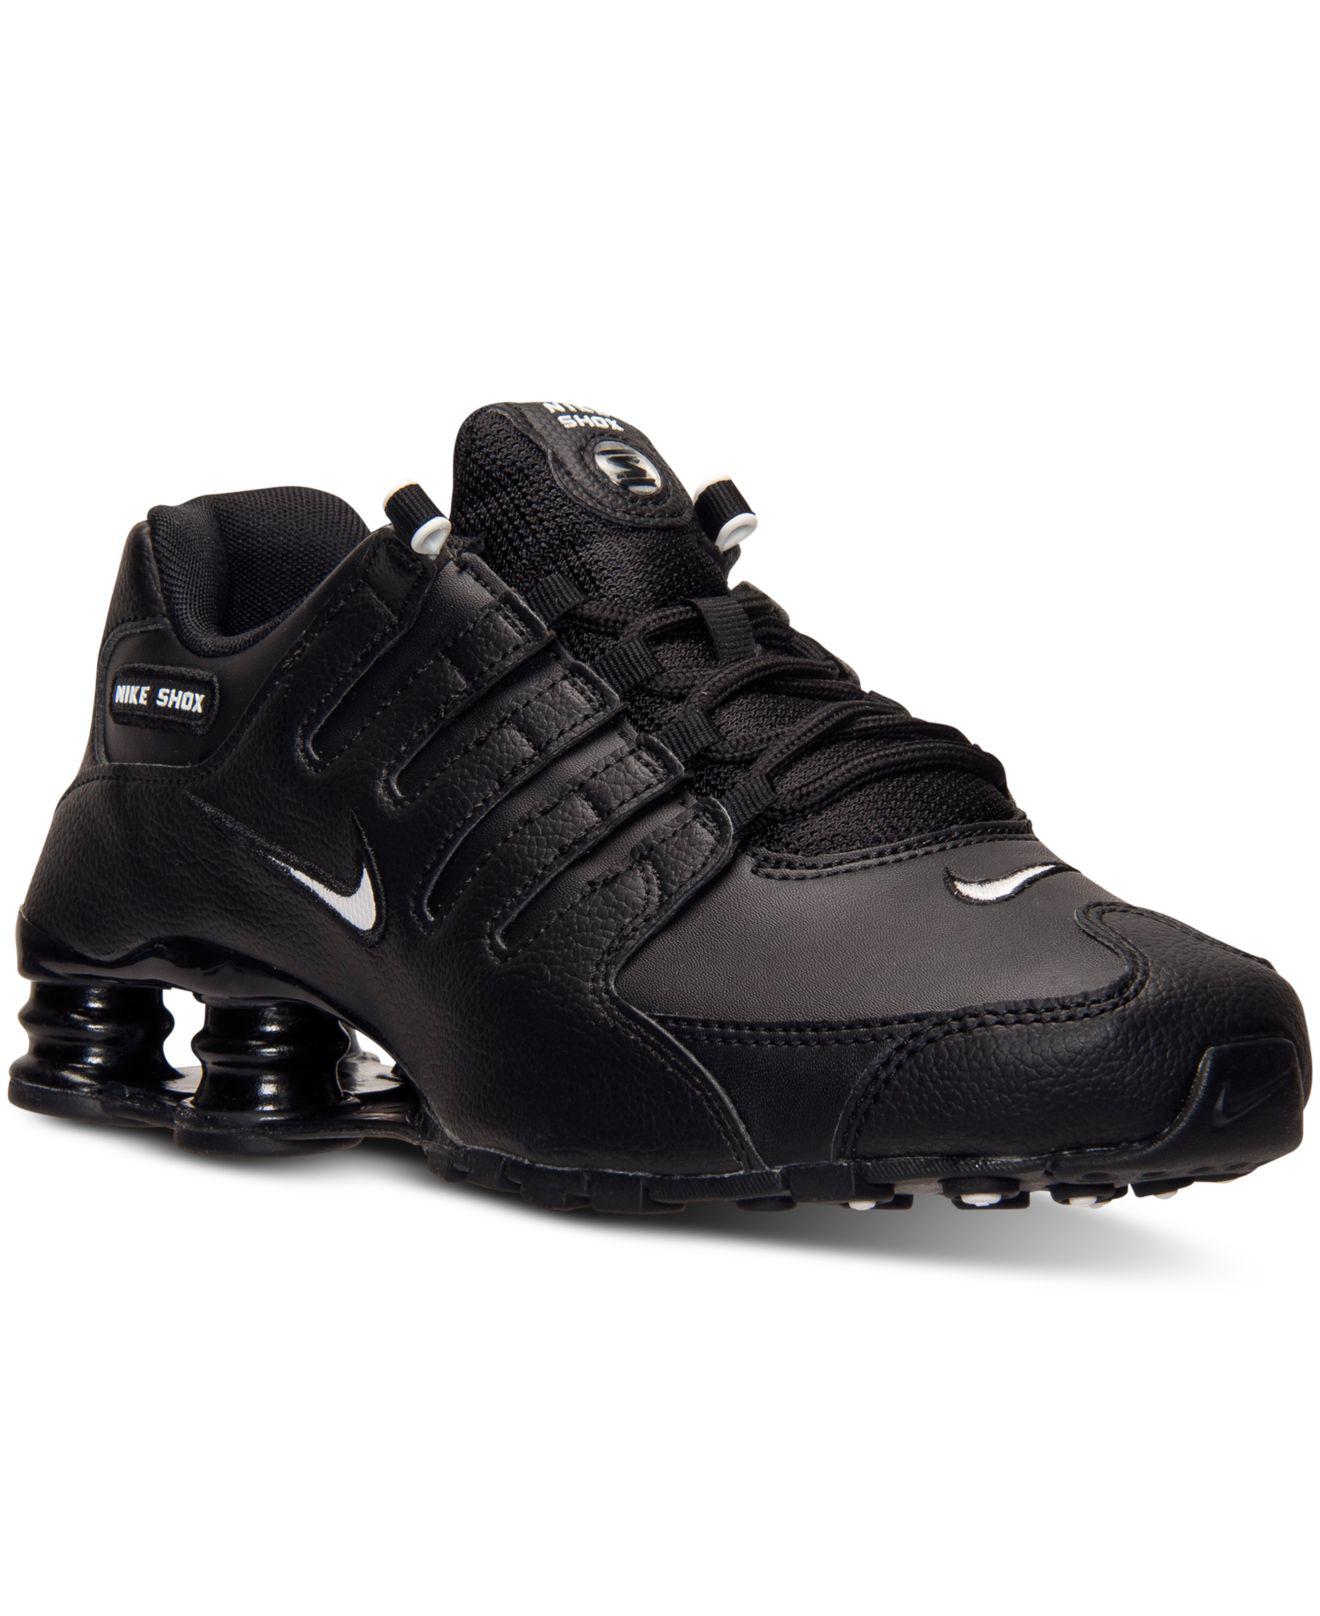 Nike Synthetic Shox Nz Eu in Black/White/Black (Black) for Men - Lyst